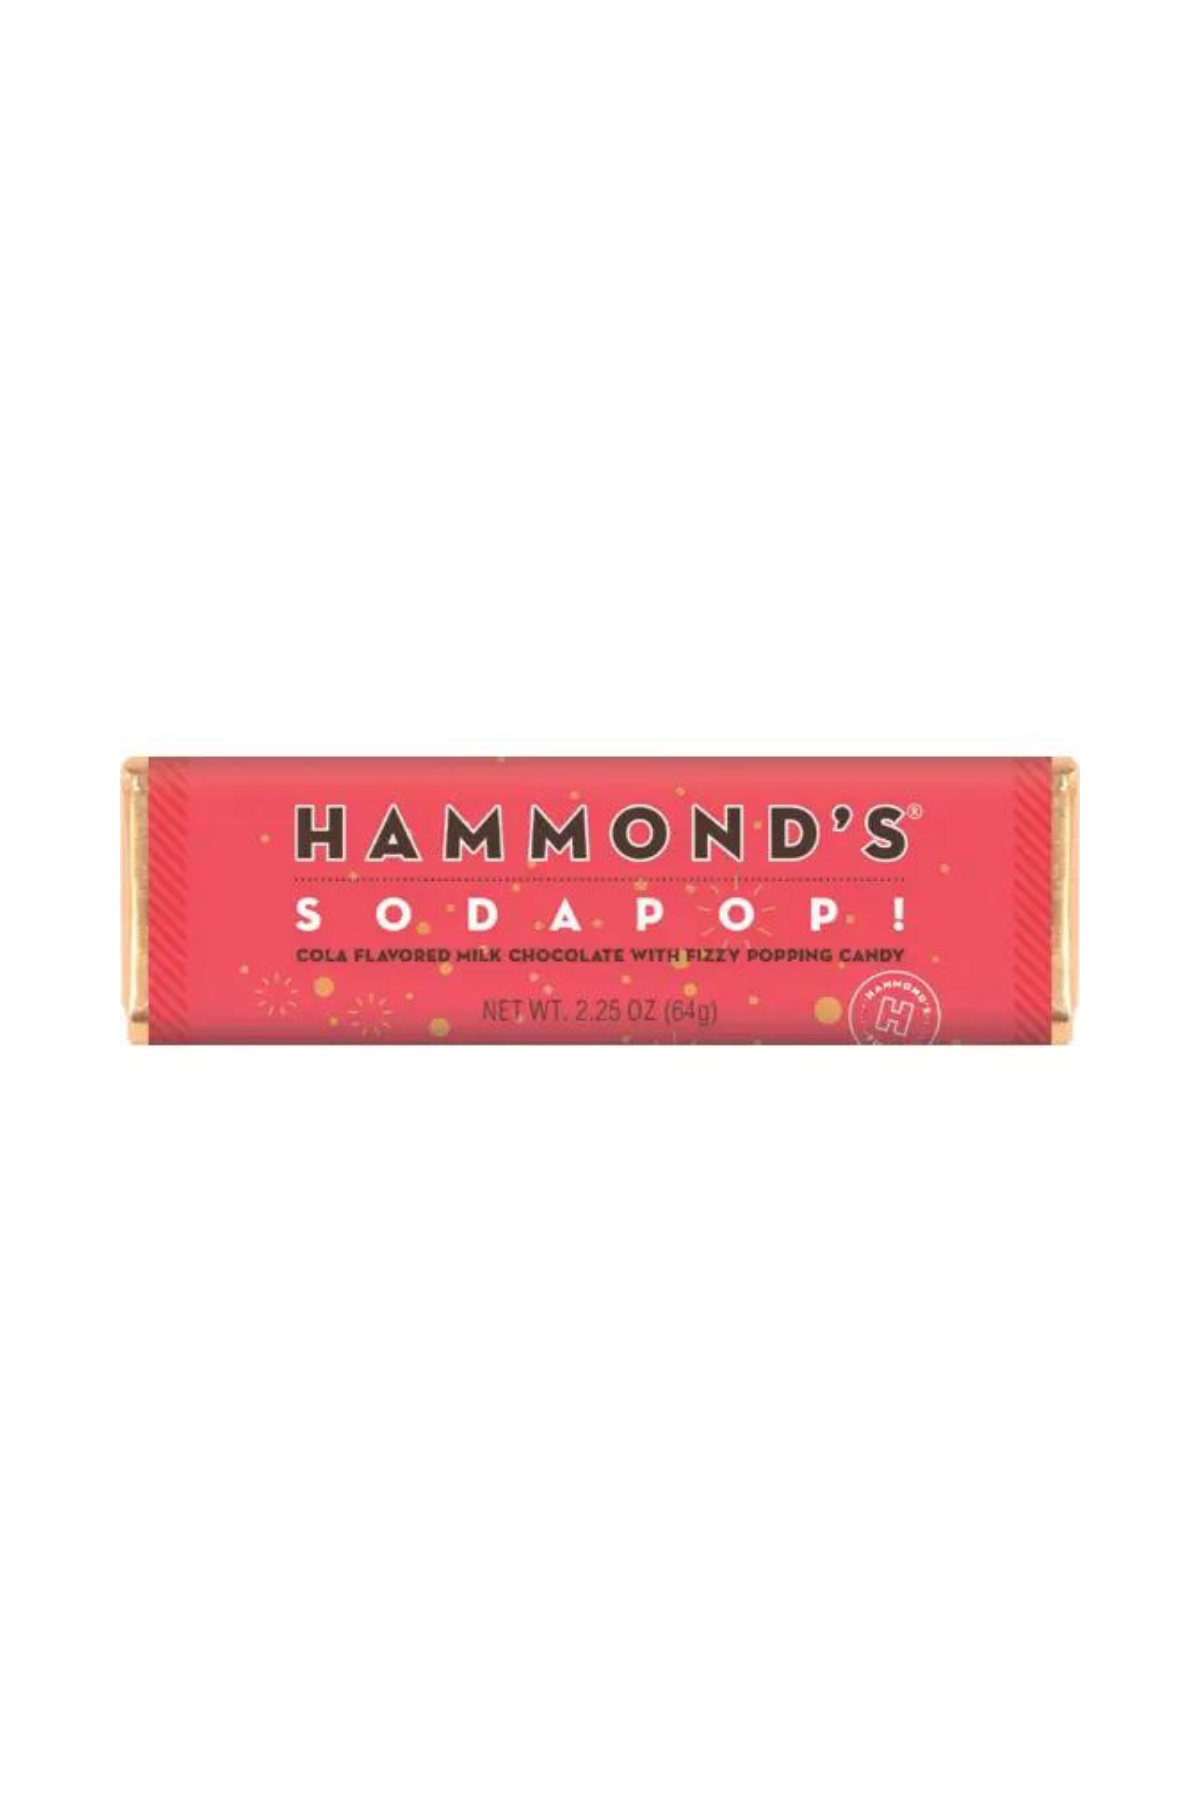 Hammond's Sodapop! Chocolate Candy Bar